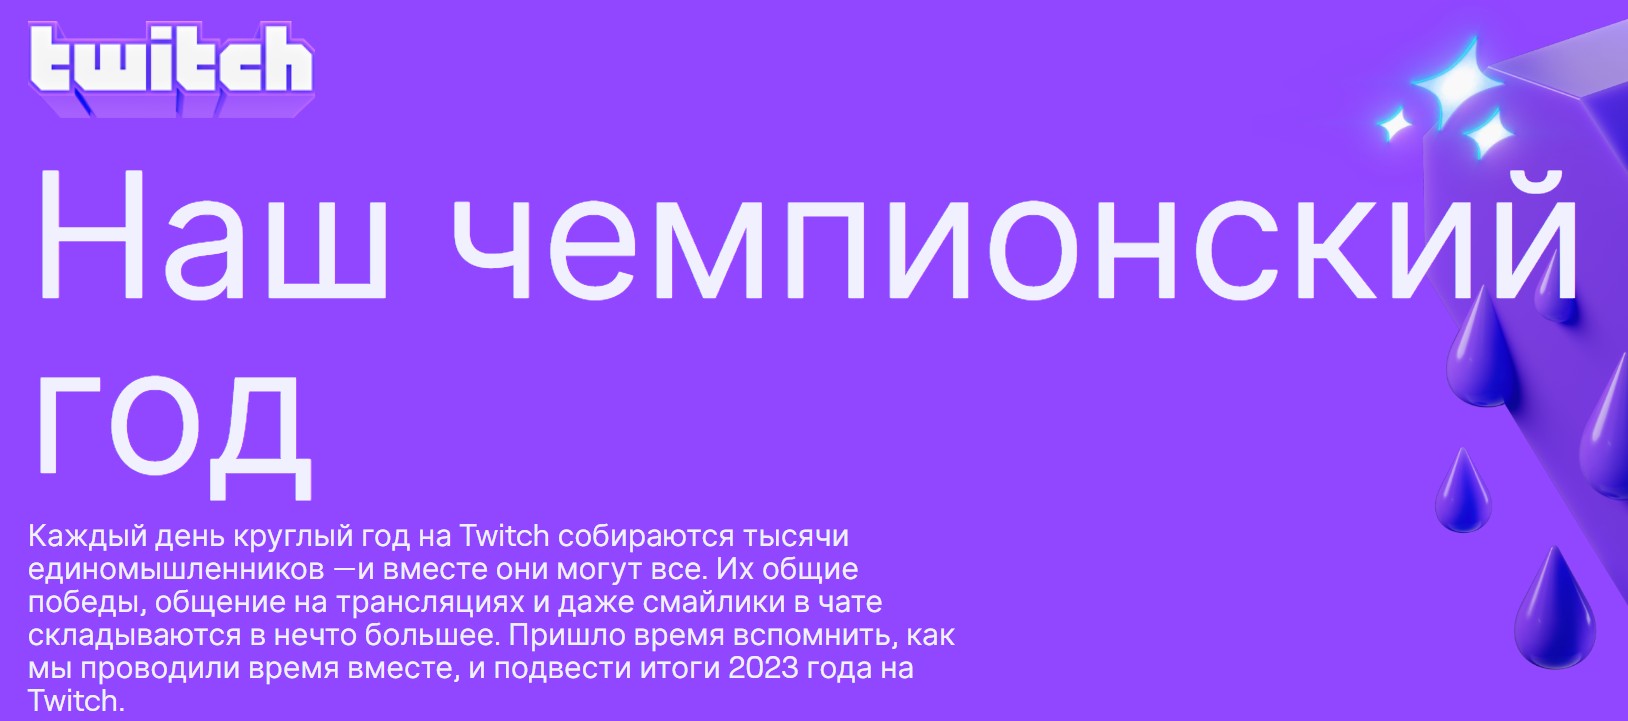 Twitch представил страницу с итогами уходящего 2023 года